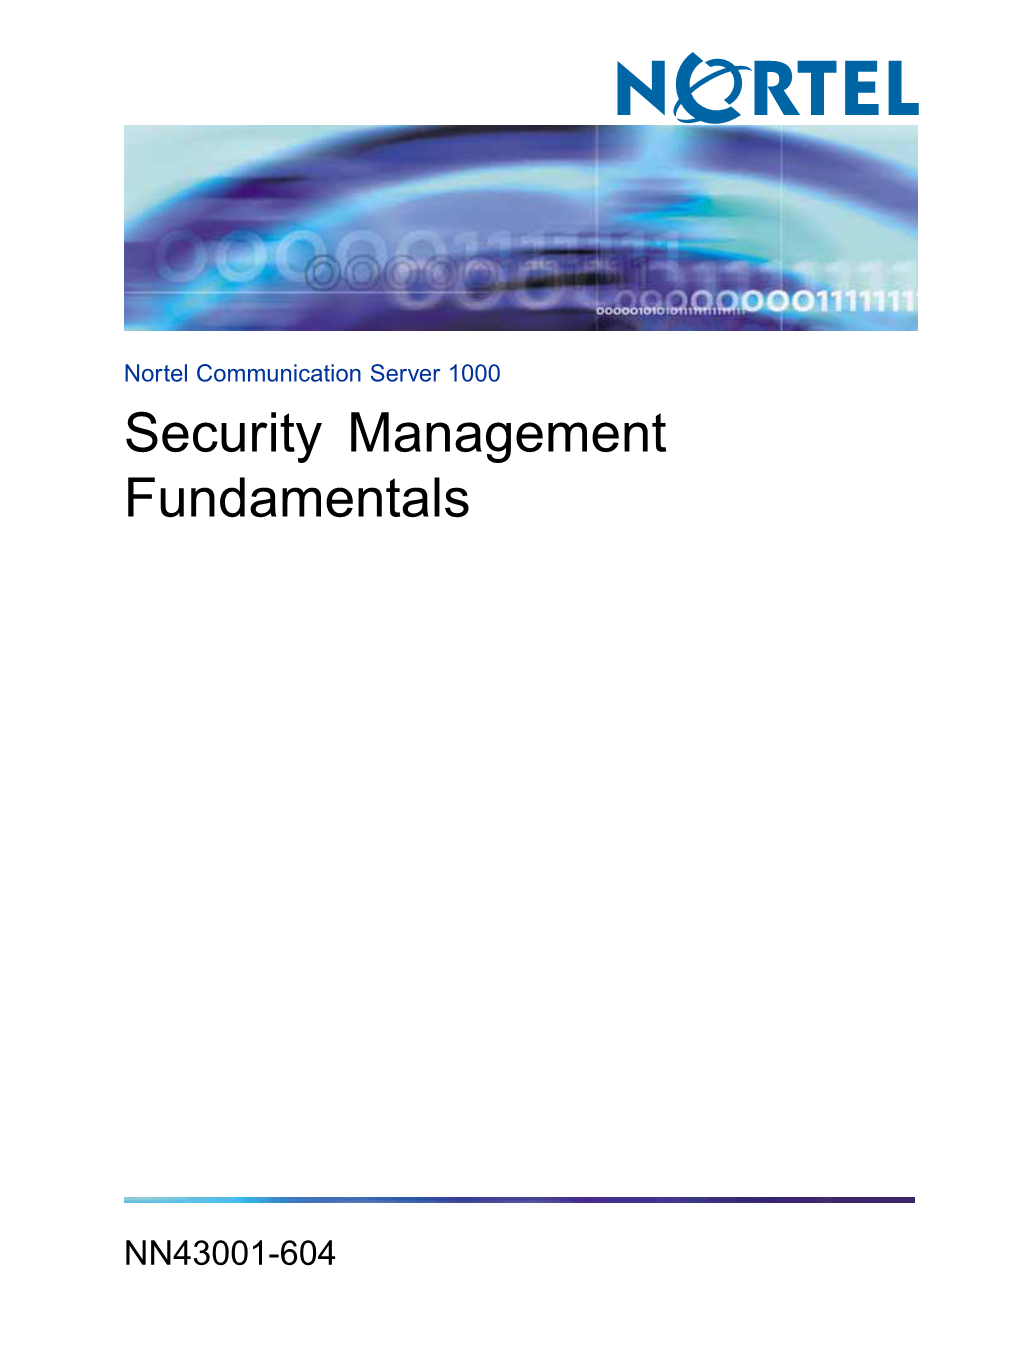 Security Management Fundamentals